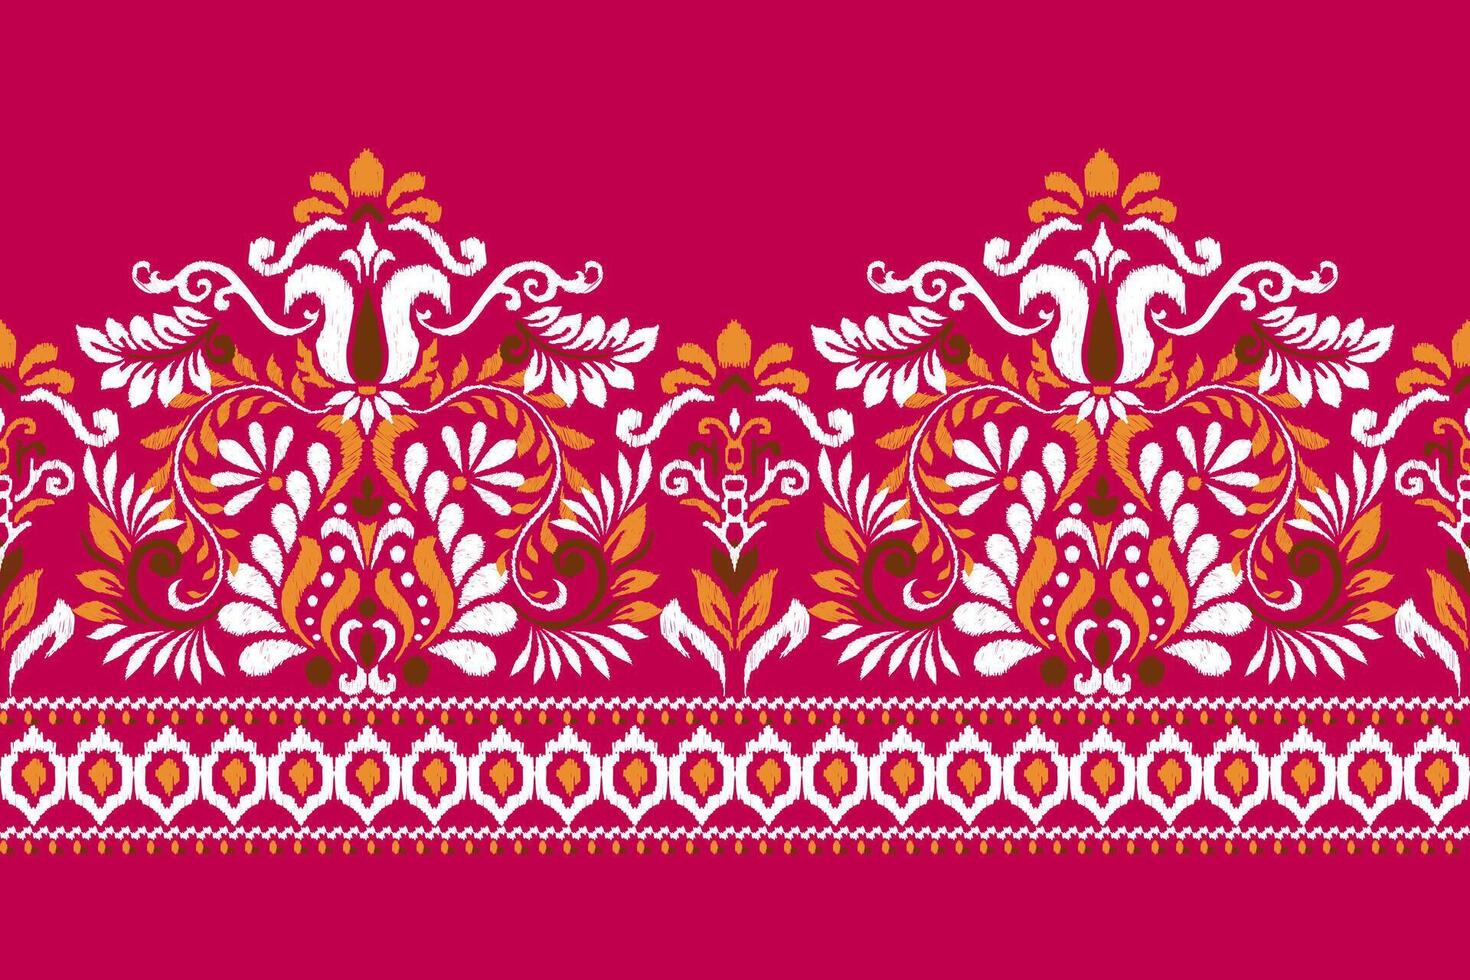 ikat blommig mönster traditionell på persisk bakgrund vektor illustration.ikat etnisk orientalisk broderi, aztek stil, abstrakt bakgrund.design för textur, tyg, kläder, inslagning, dekoration, sarong.